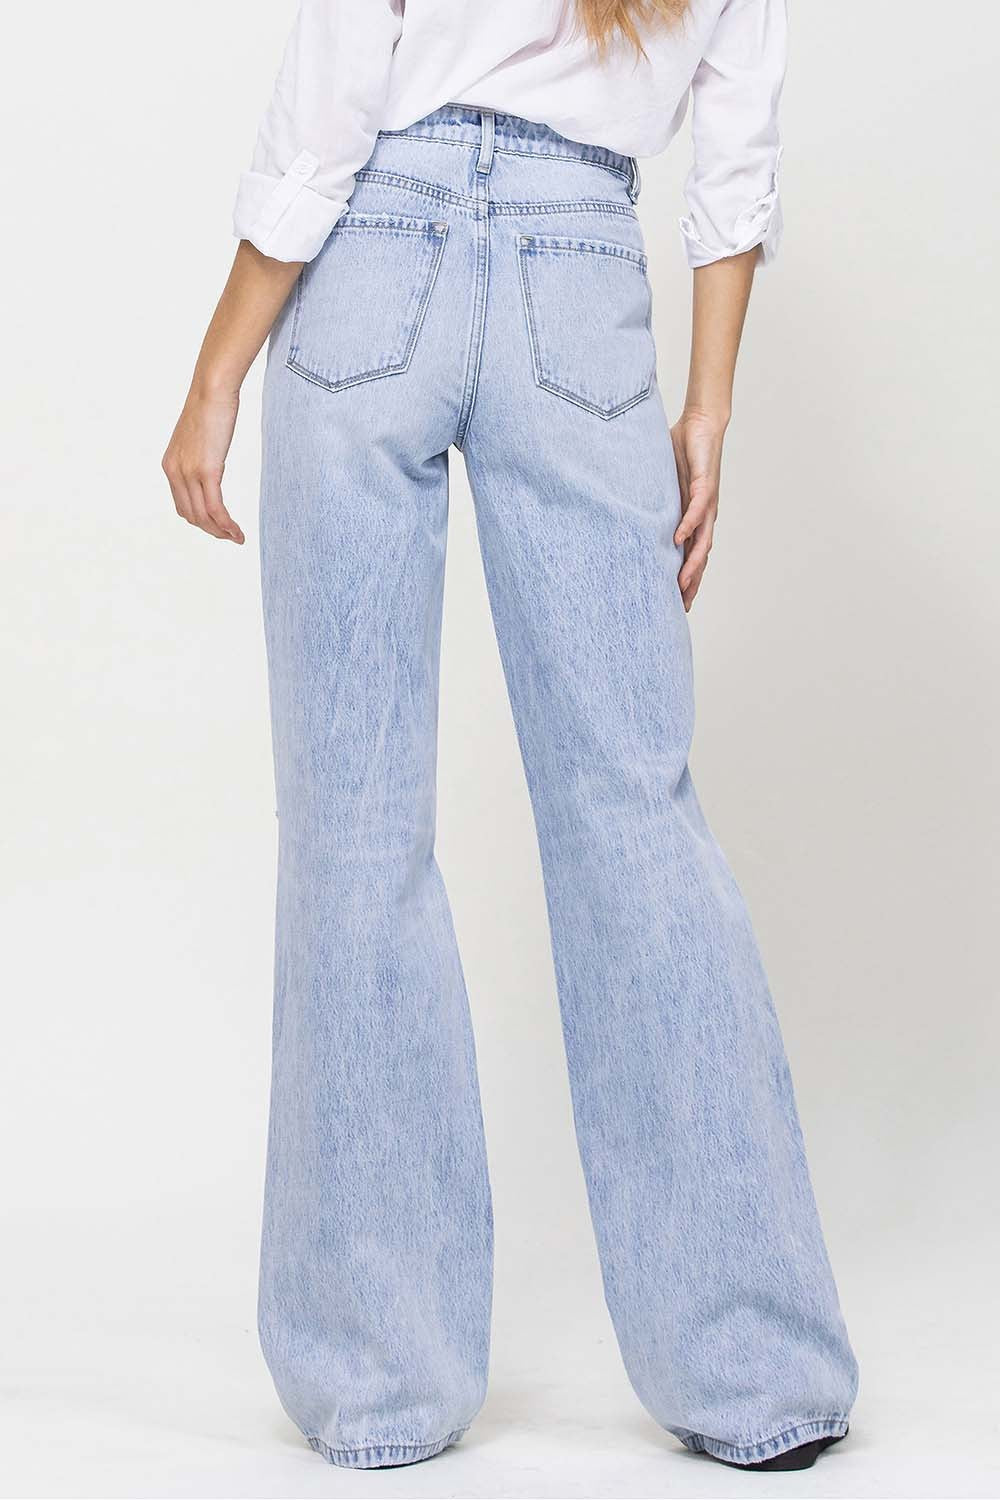 Vervet 90's High Rise Vintage Flare Jeans- Barely Worn